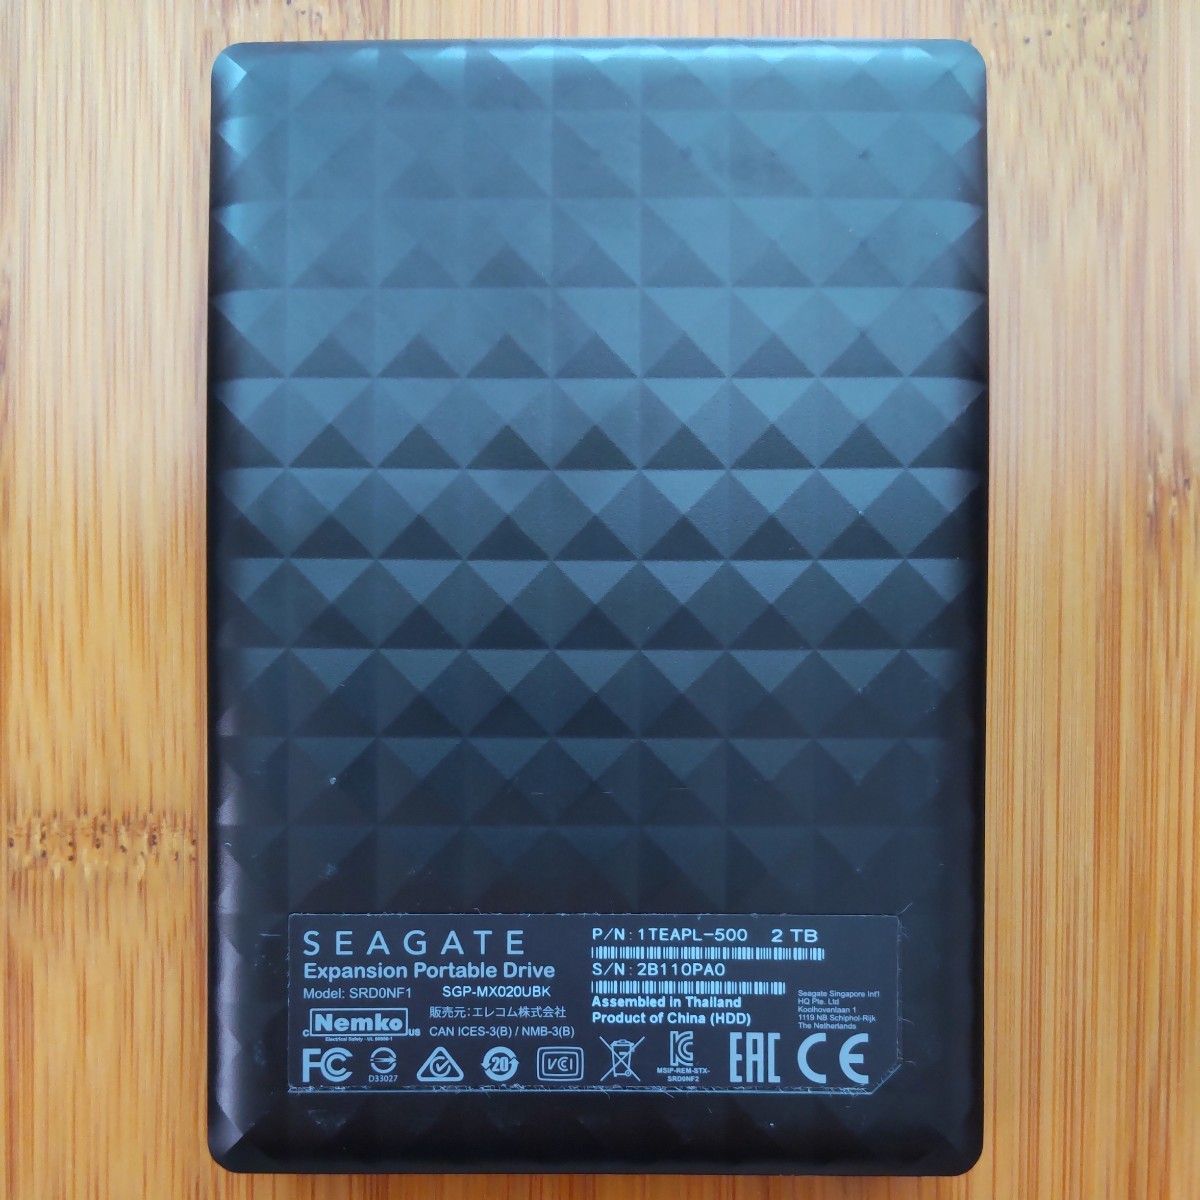 Seagate ポータブルハードHDD 2TB (SGP-MX020UBK)